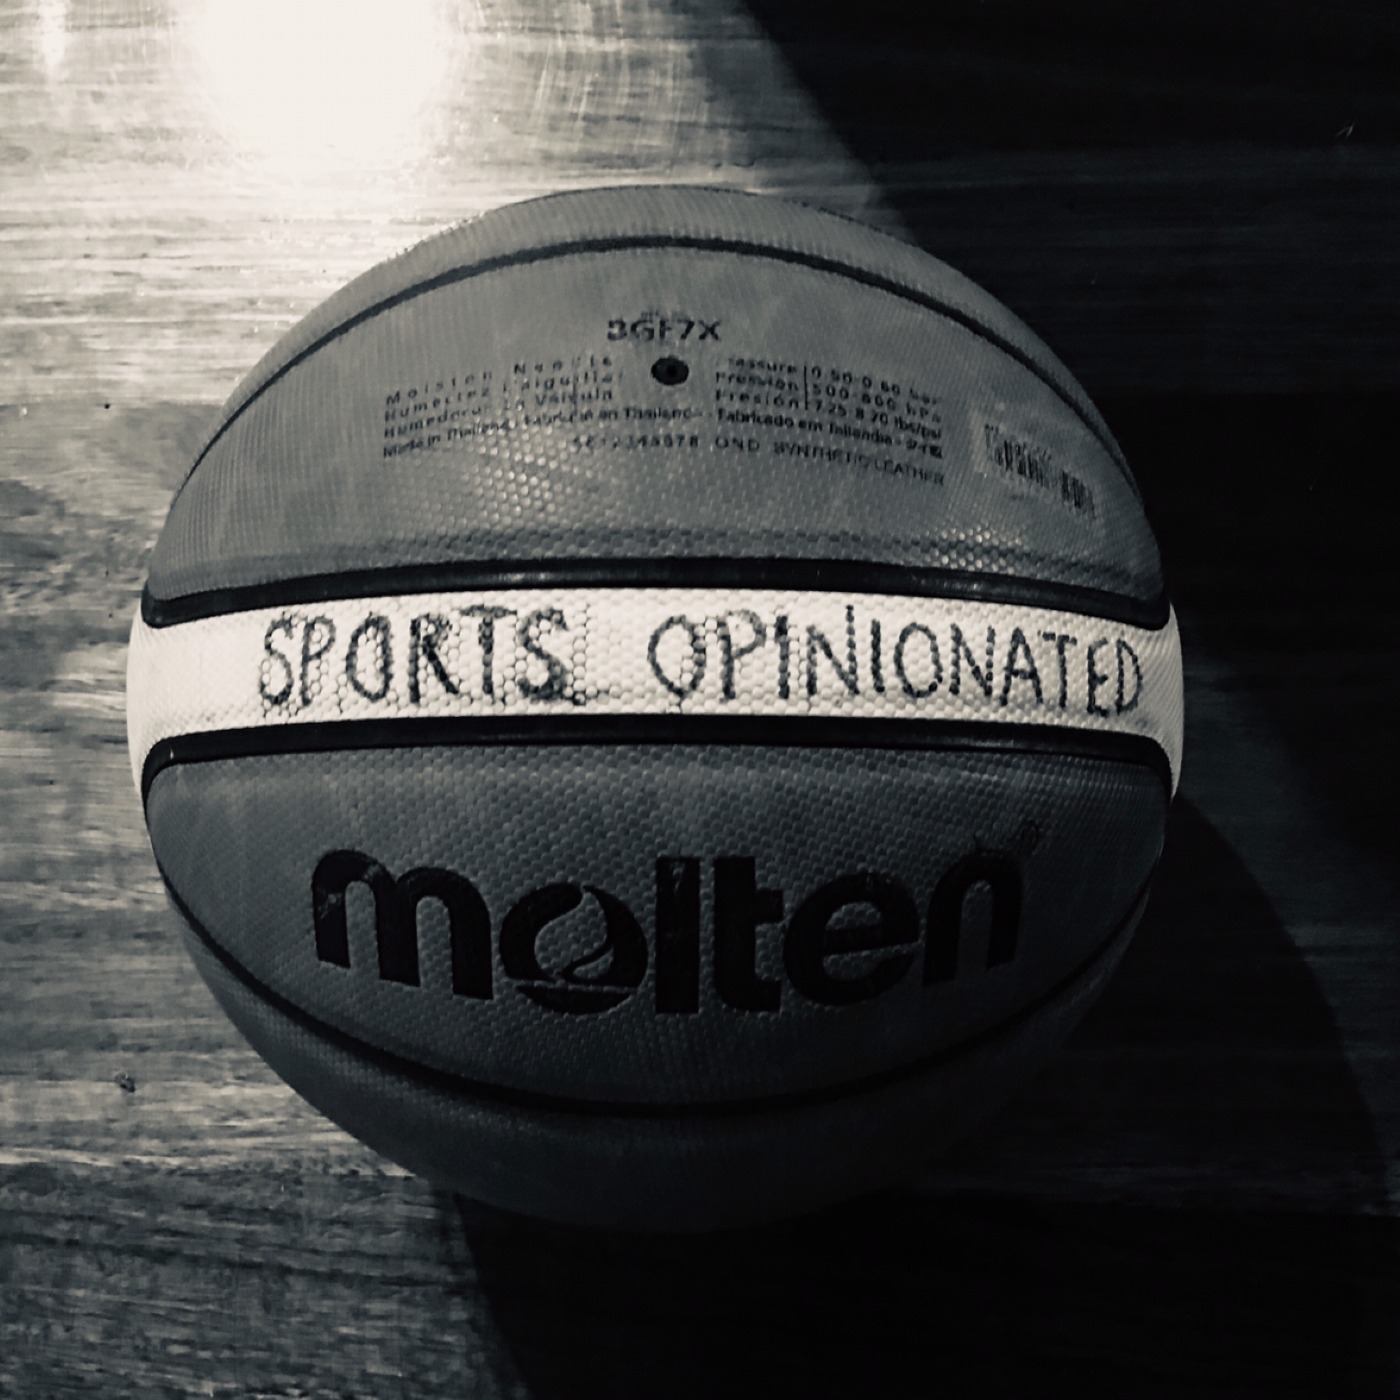 Sports Opinionated - Pod 14 - 2020 NBA Playoffs - The NBA Finals